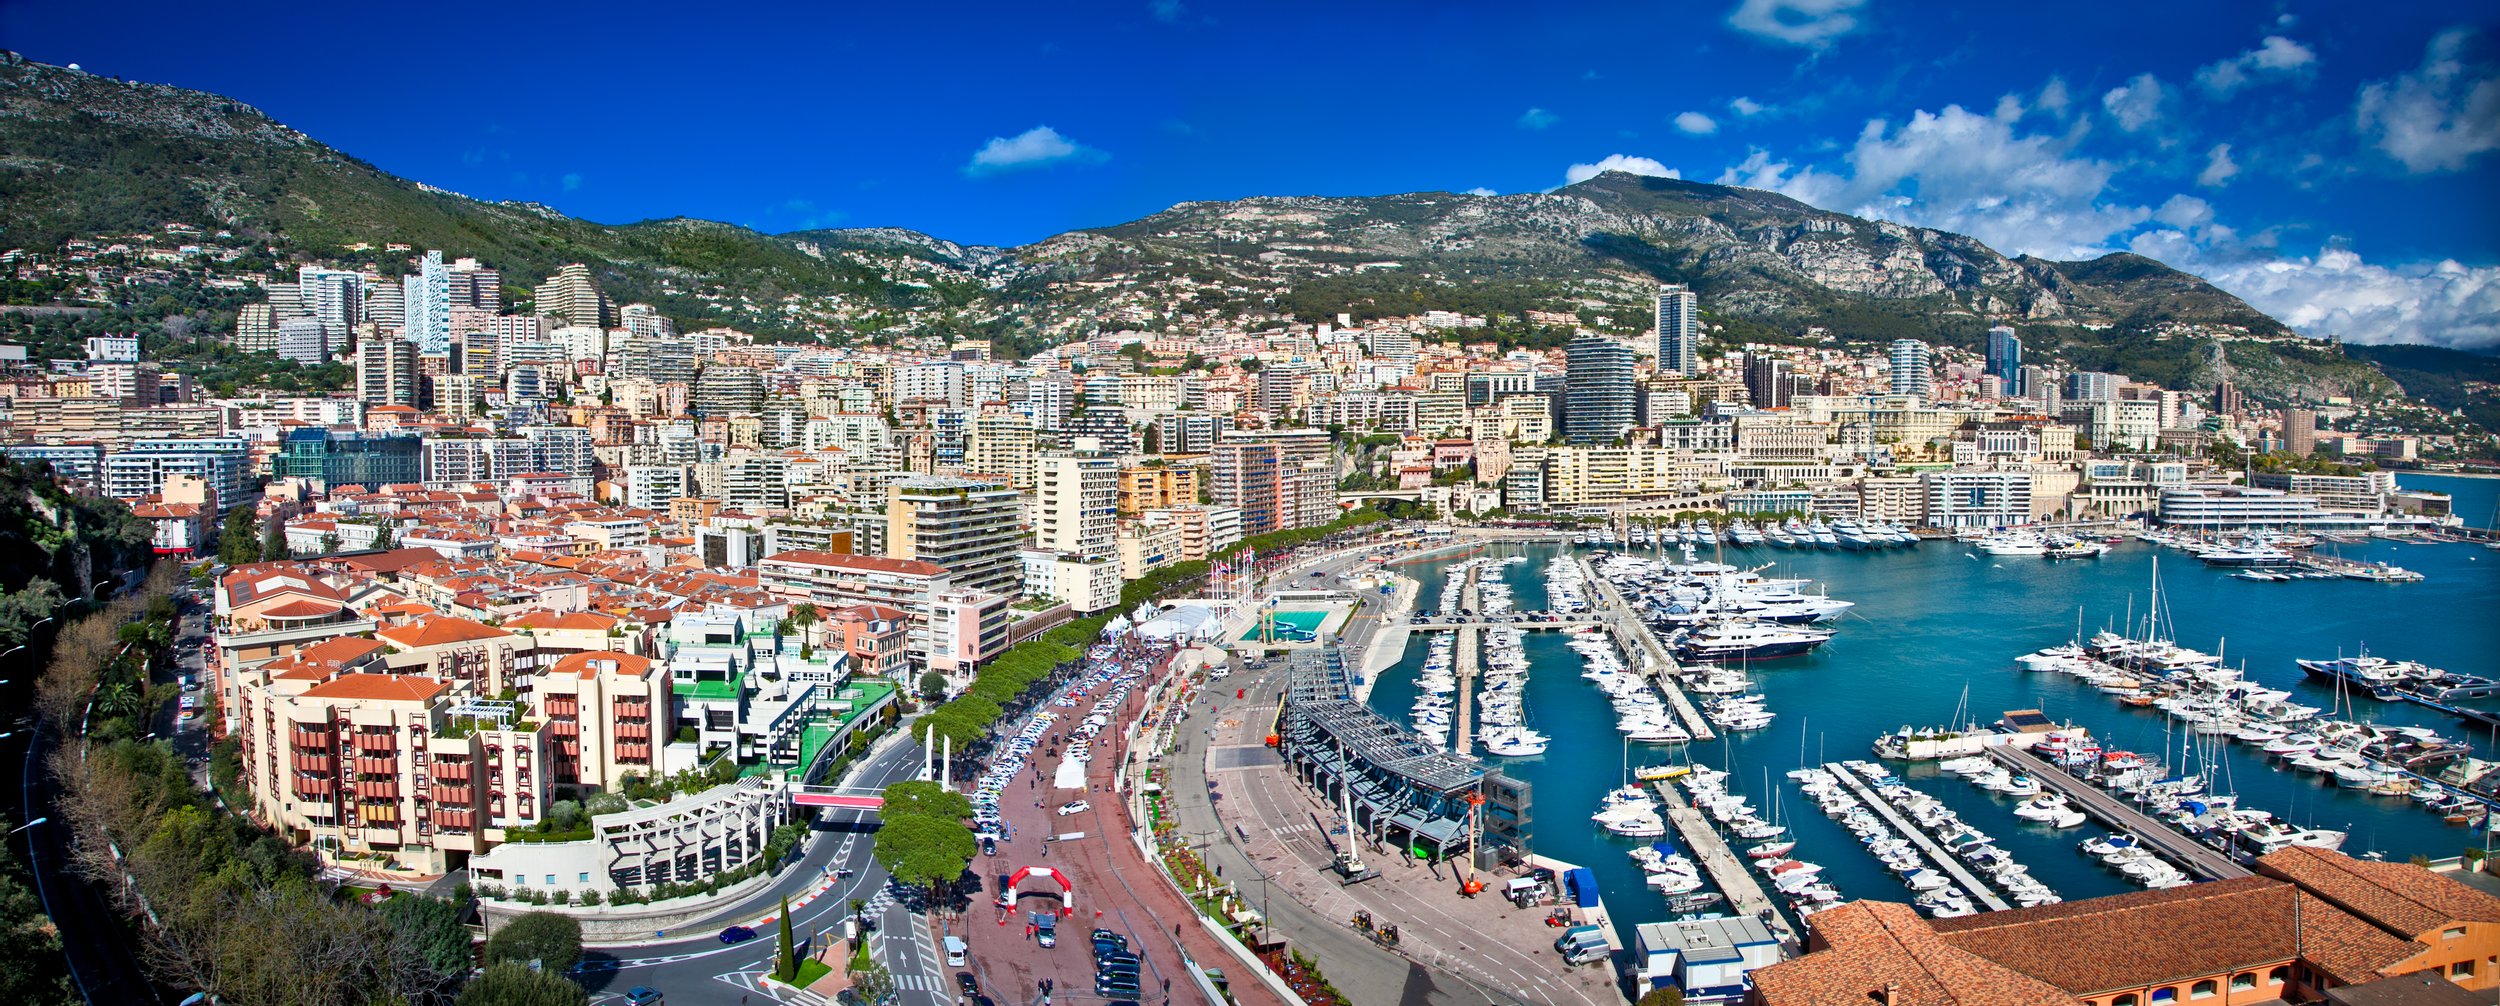 Monaco: The Oldest Member of the Formula 1 Family